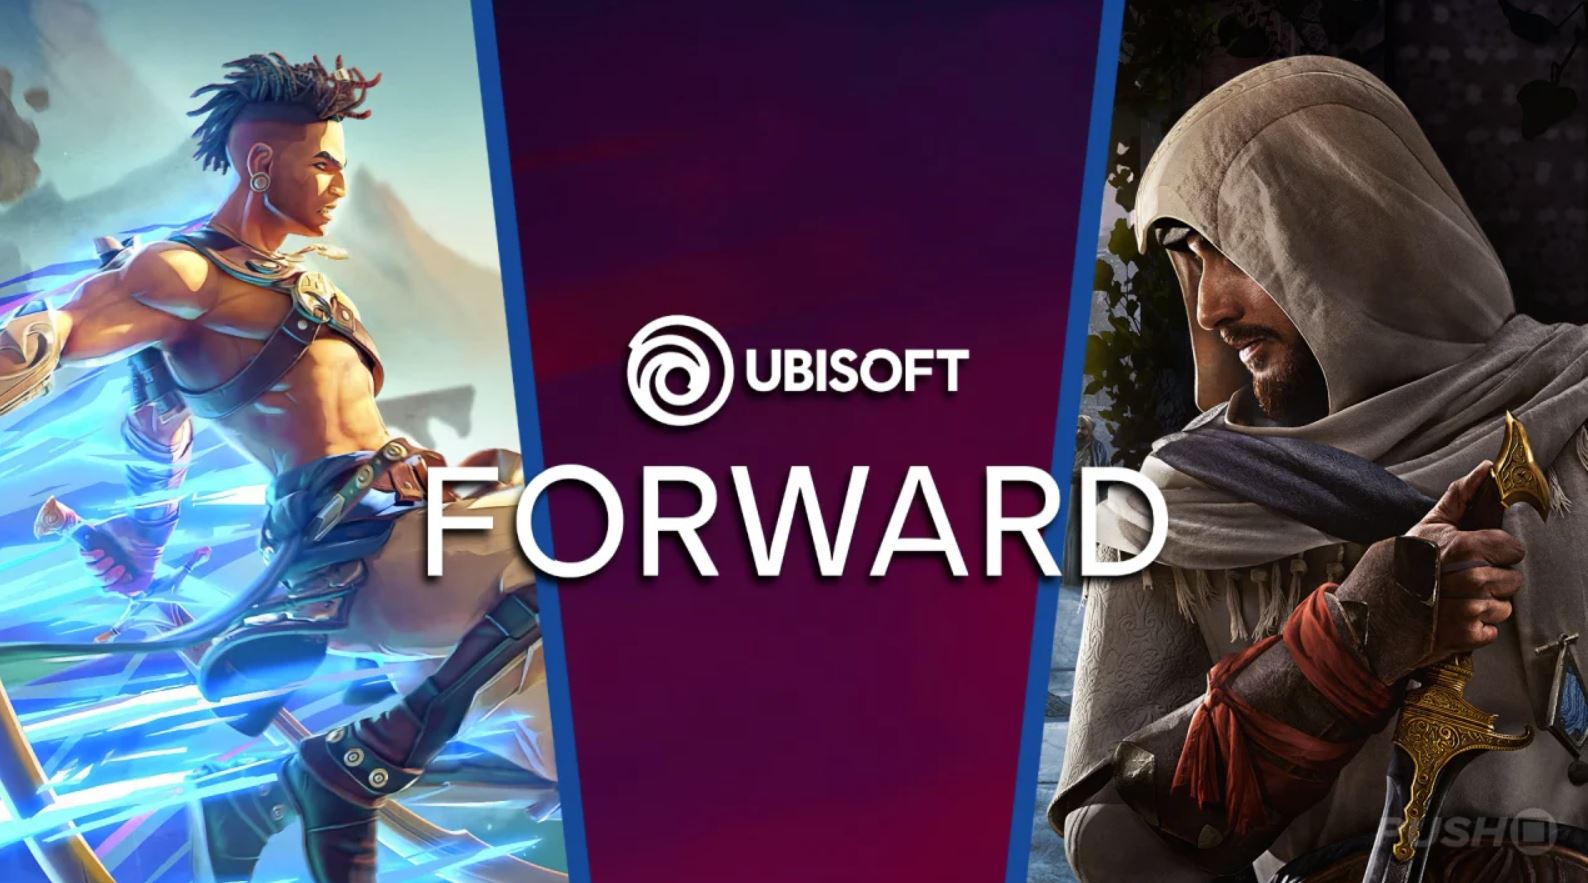 Ubisoft Forward summary assassins creed prince of persia crew avatar arabgamerz عرب جيمرز ملخص يوبيسوفت فورورد اساسنز كريد